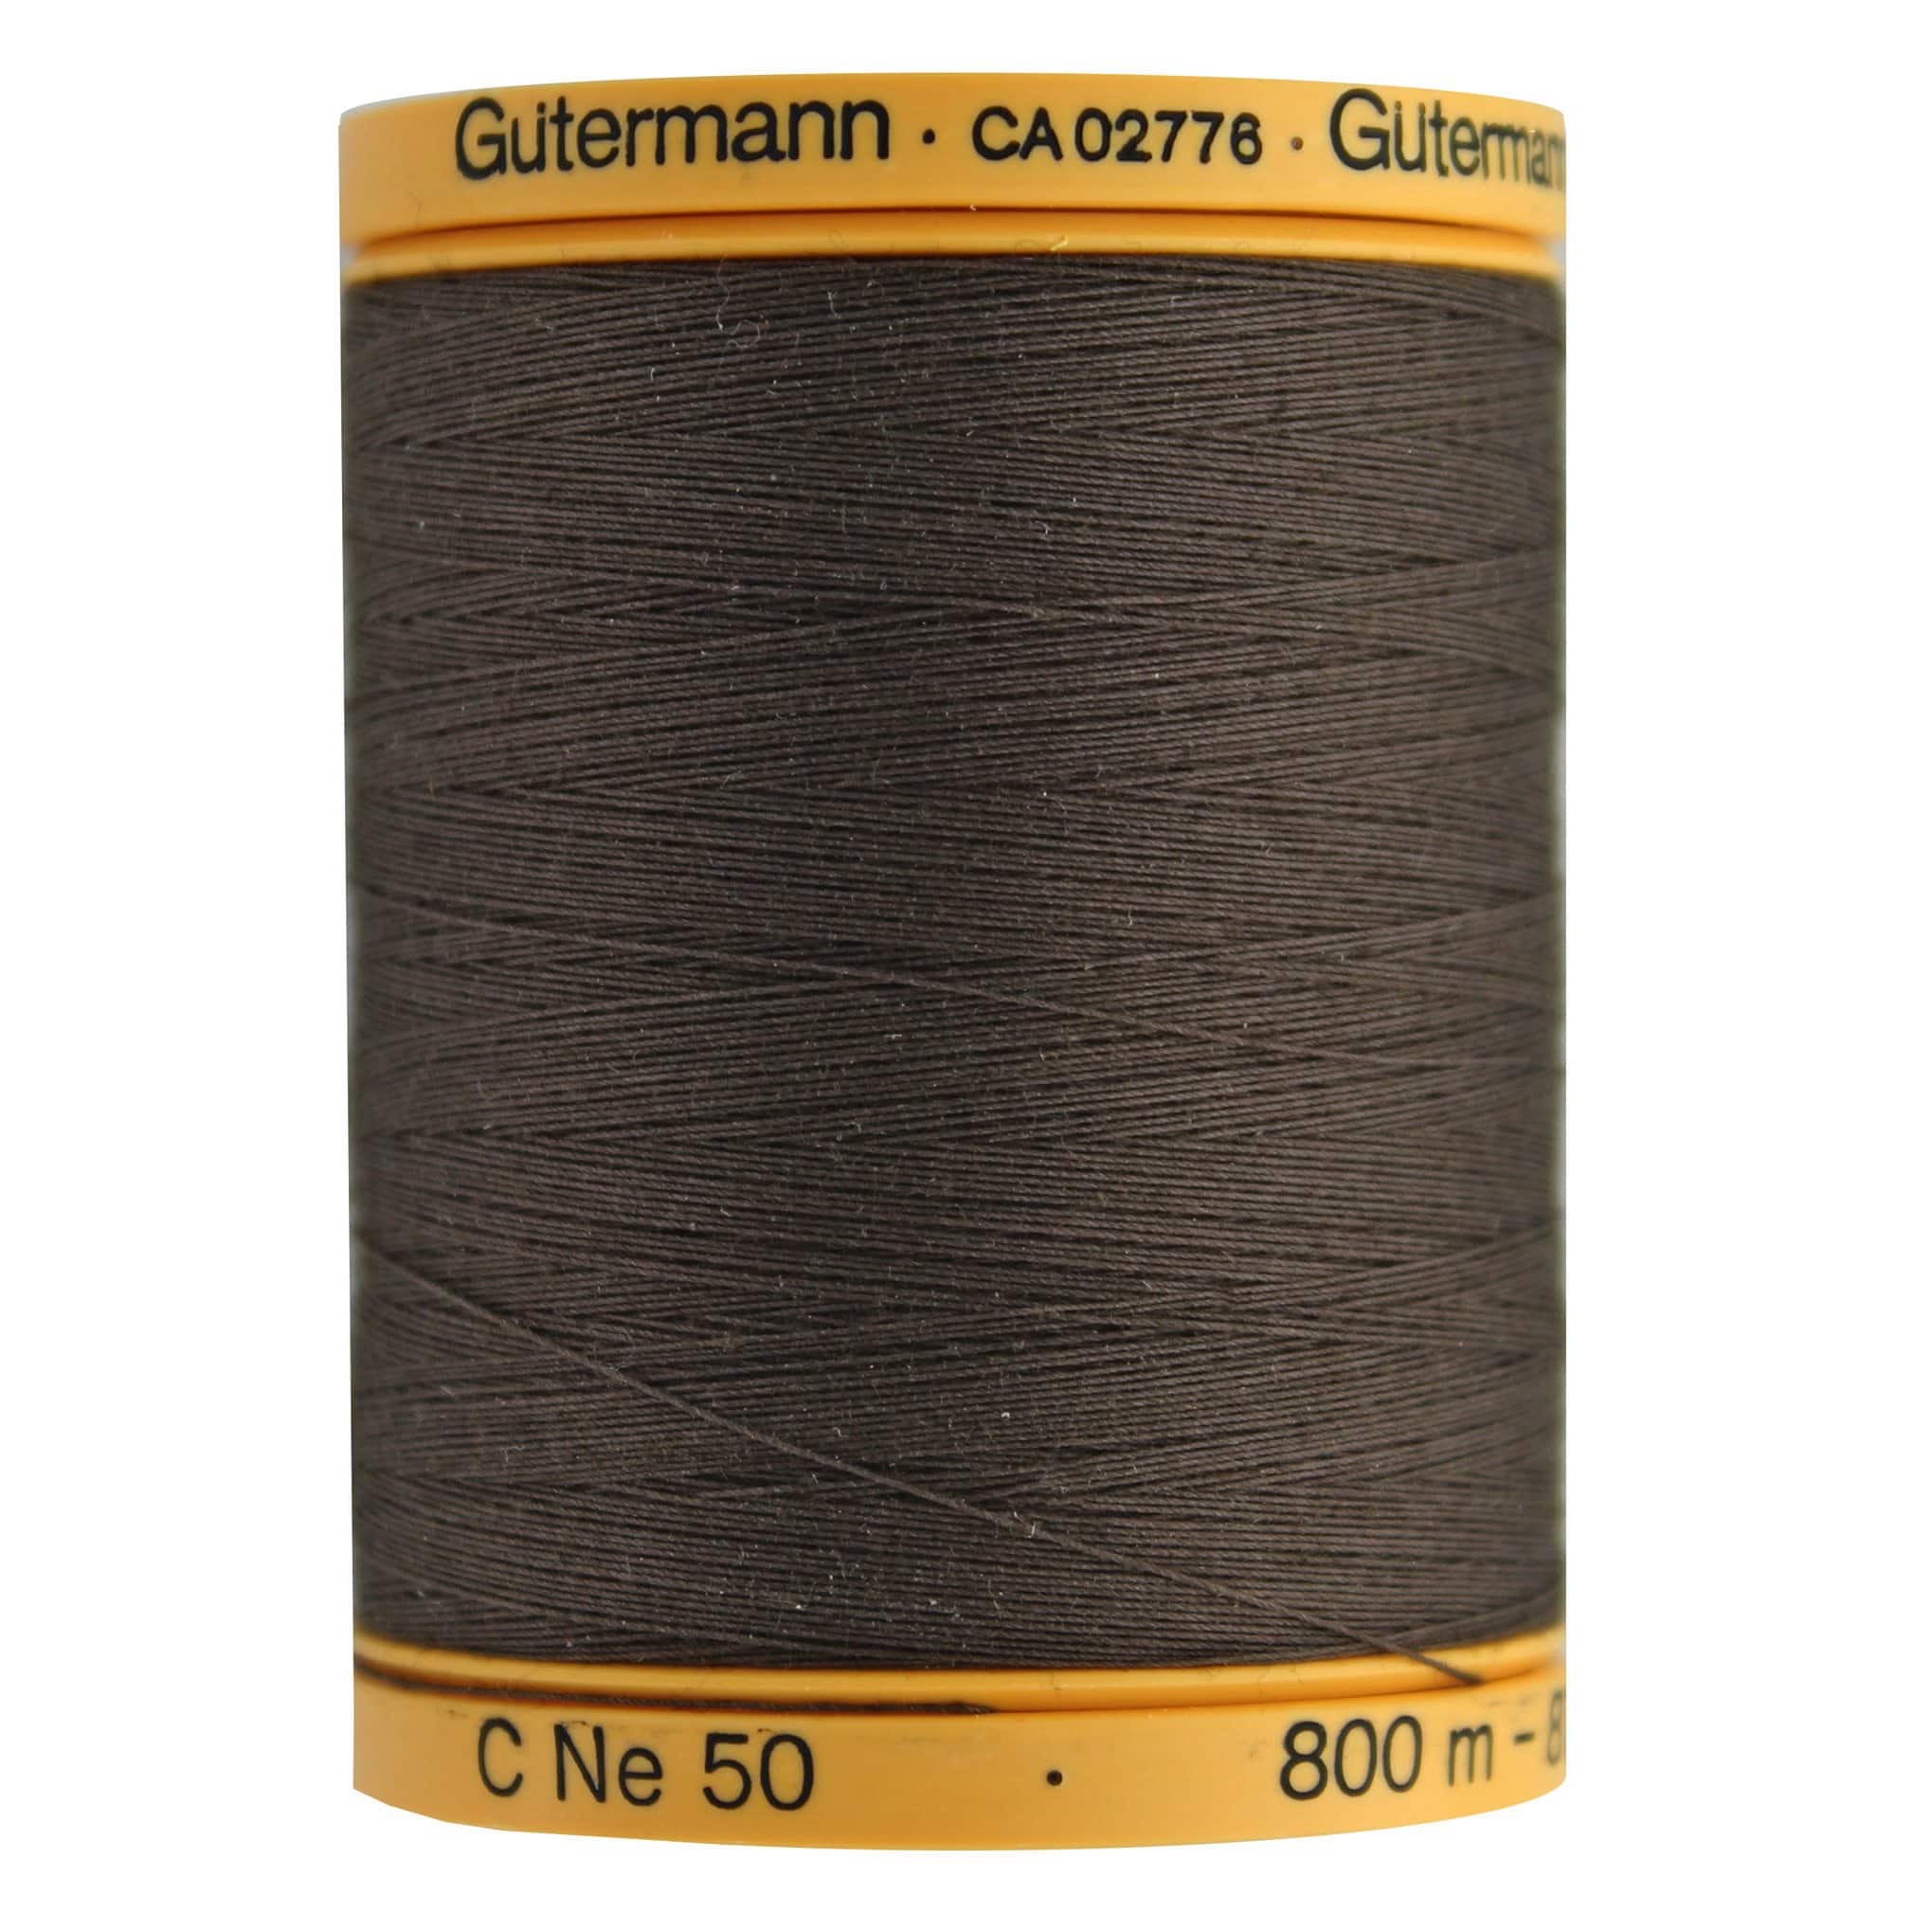 Gutermann Quilting Thread 220 Yards-Old Gold (24692)